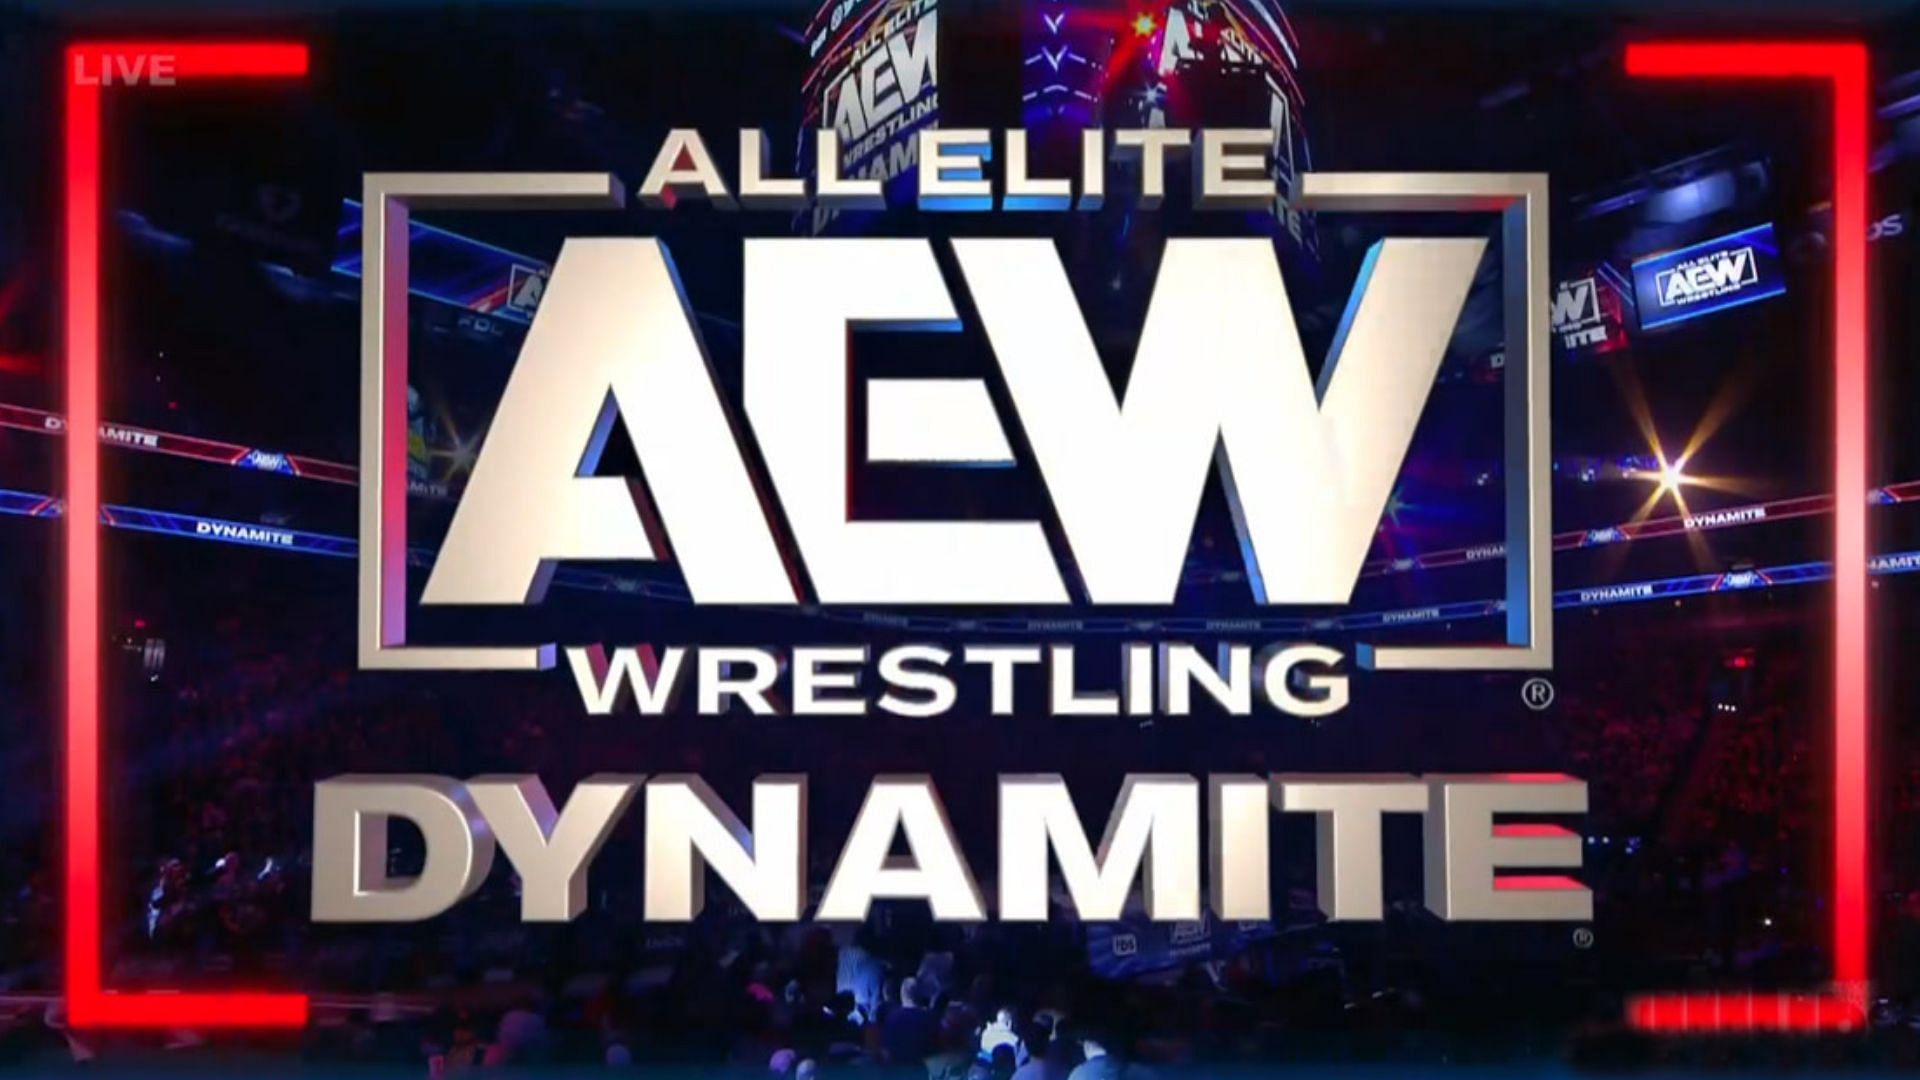 A WWE legend suffered an injury on AEW Dynamite